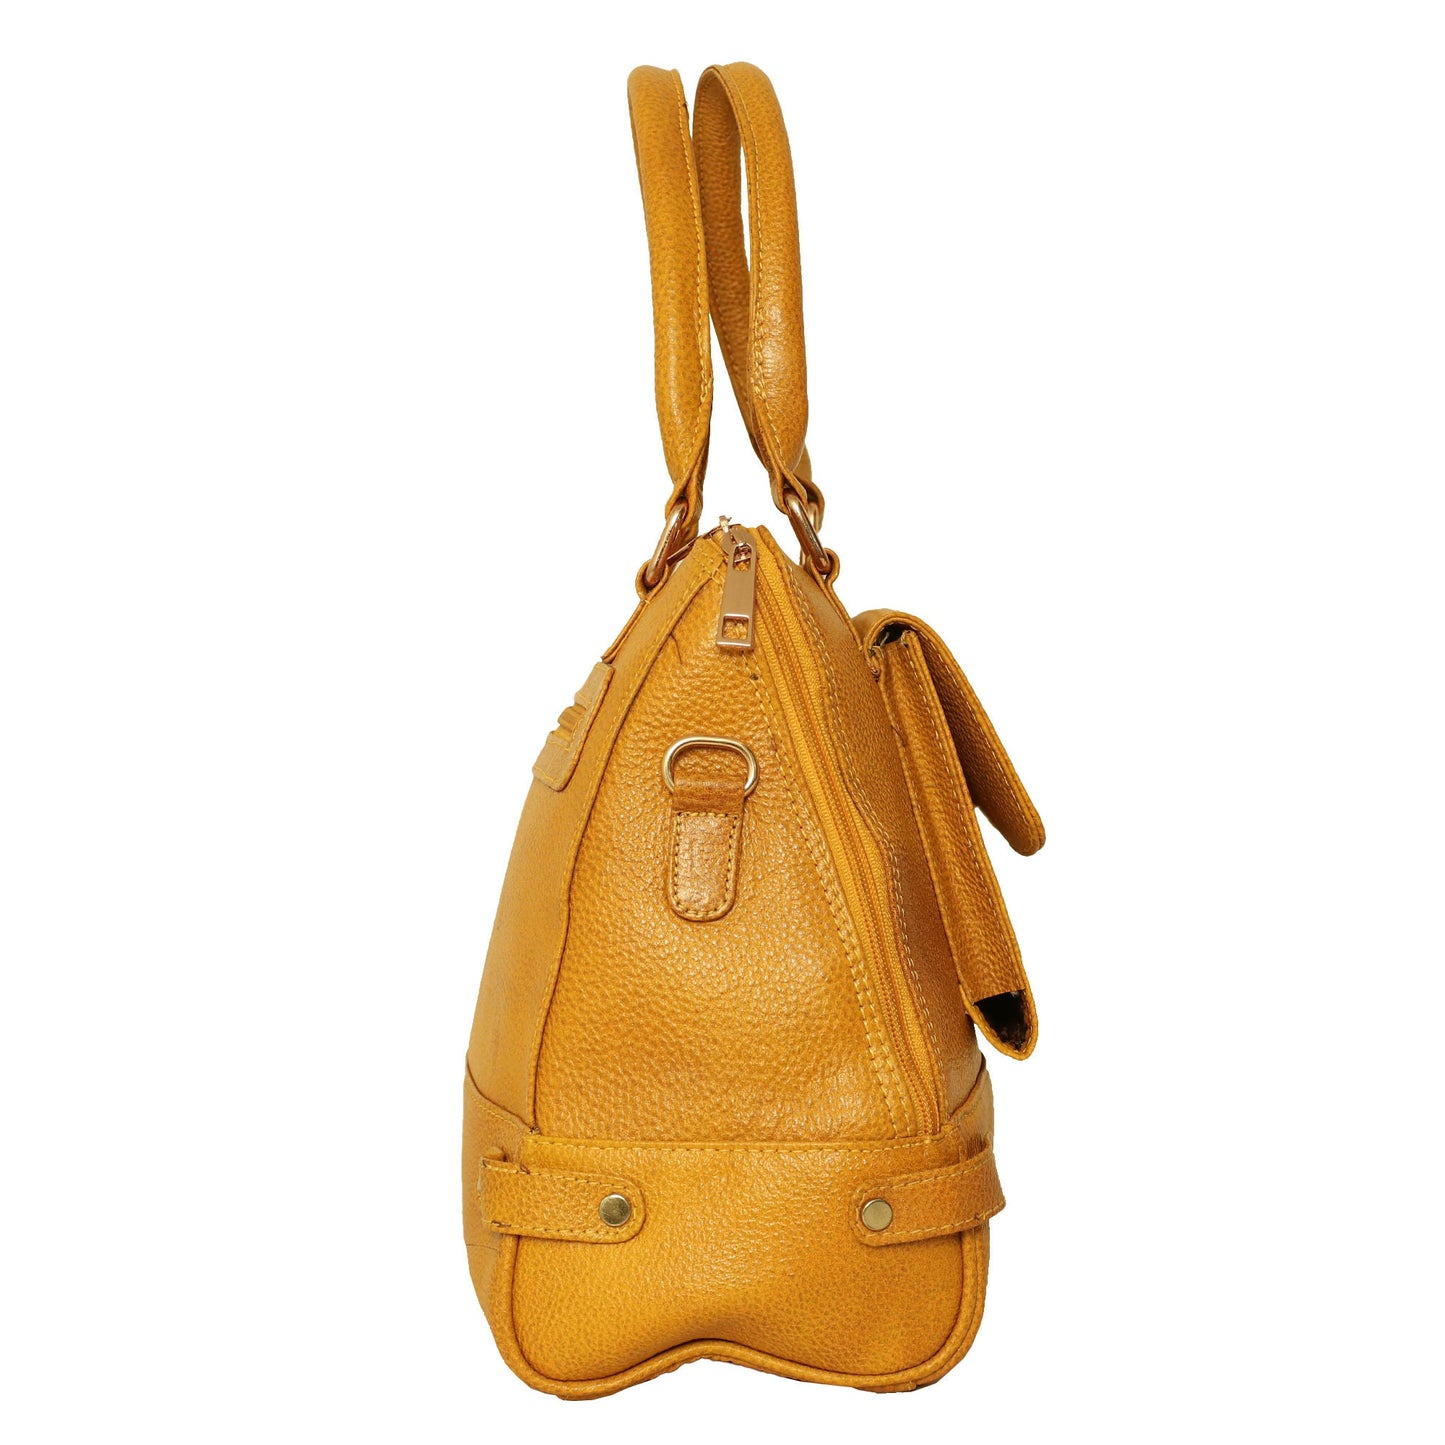 Yellow Leather Handbag for Women's Party Handbag Long Handle Crossbody Bag for Women Gift for Her Everyday Handbag Satchel Bag